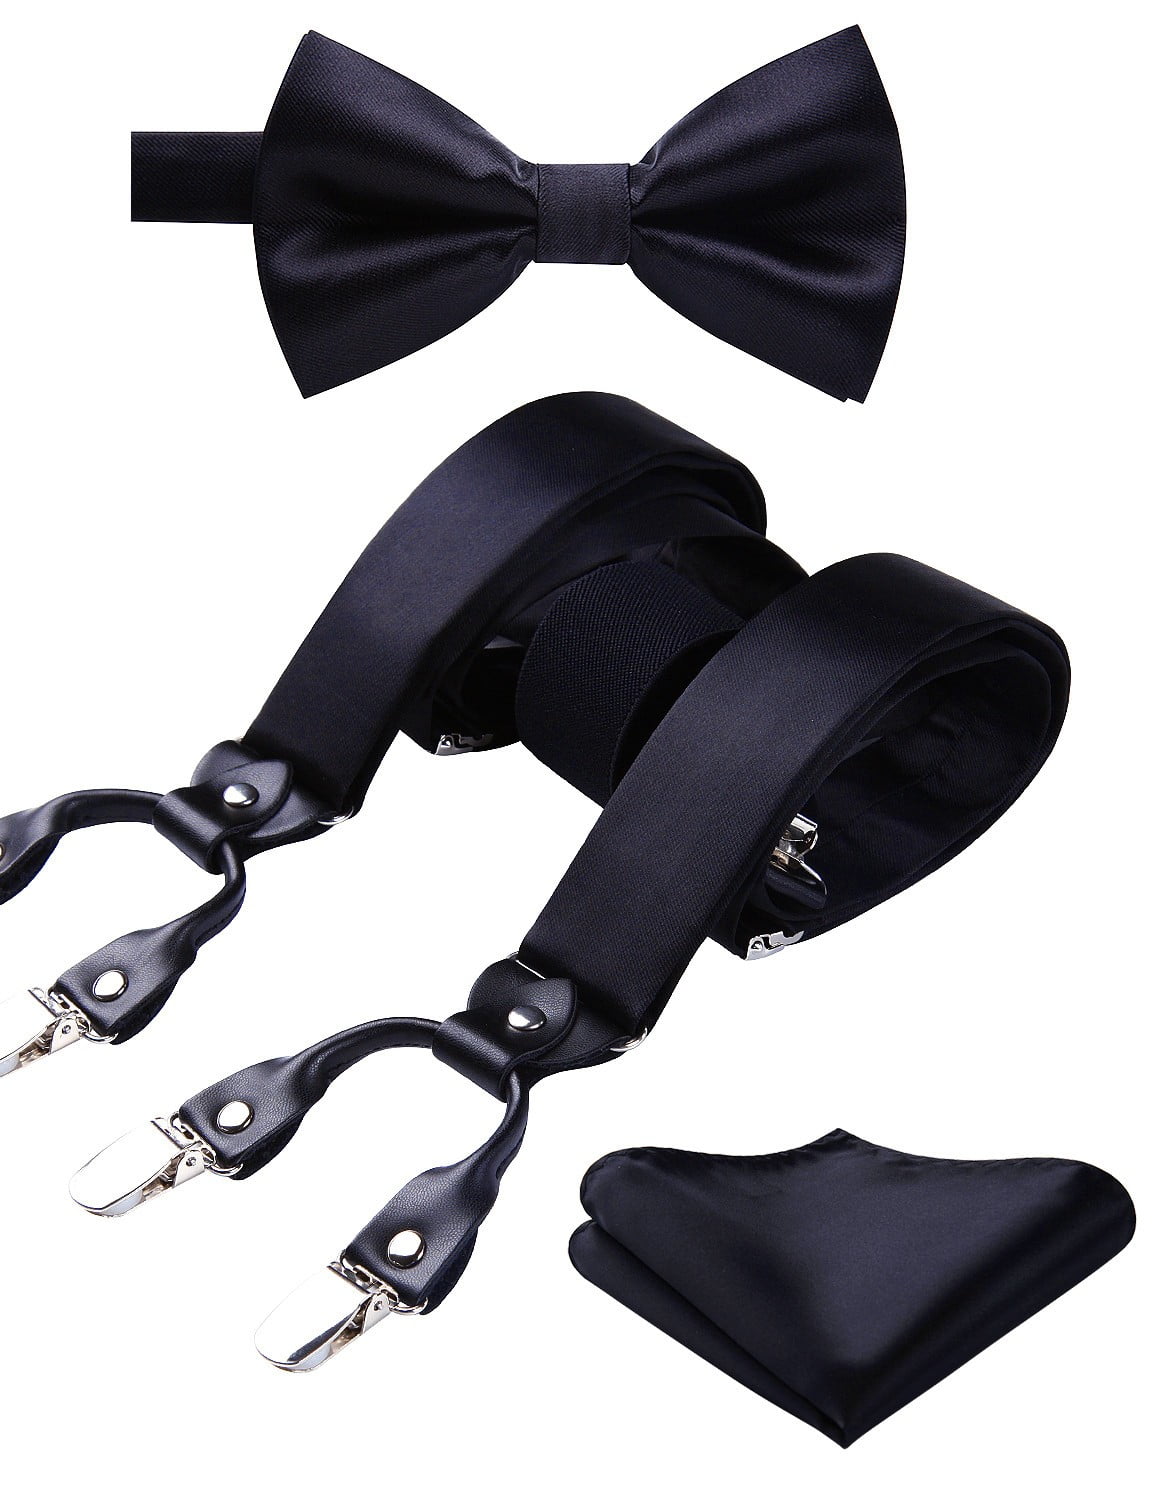 Black Suspender Set, Formal Necktie and Satin Fabric Suspenders in Solid  Black